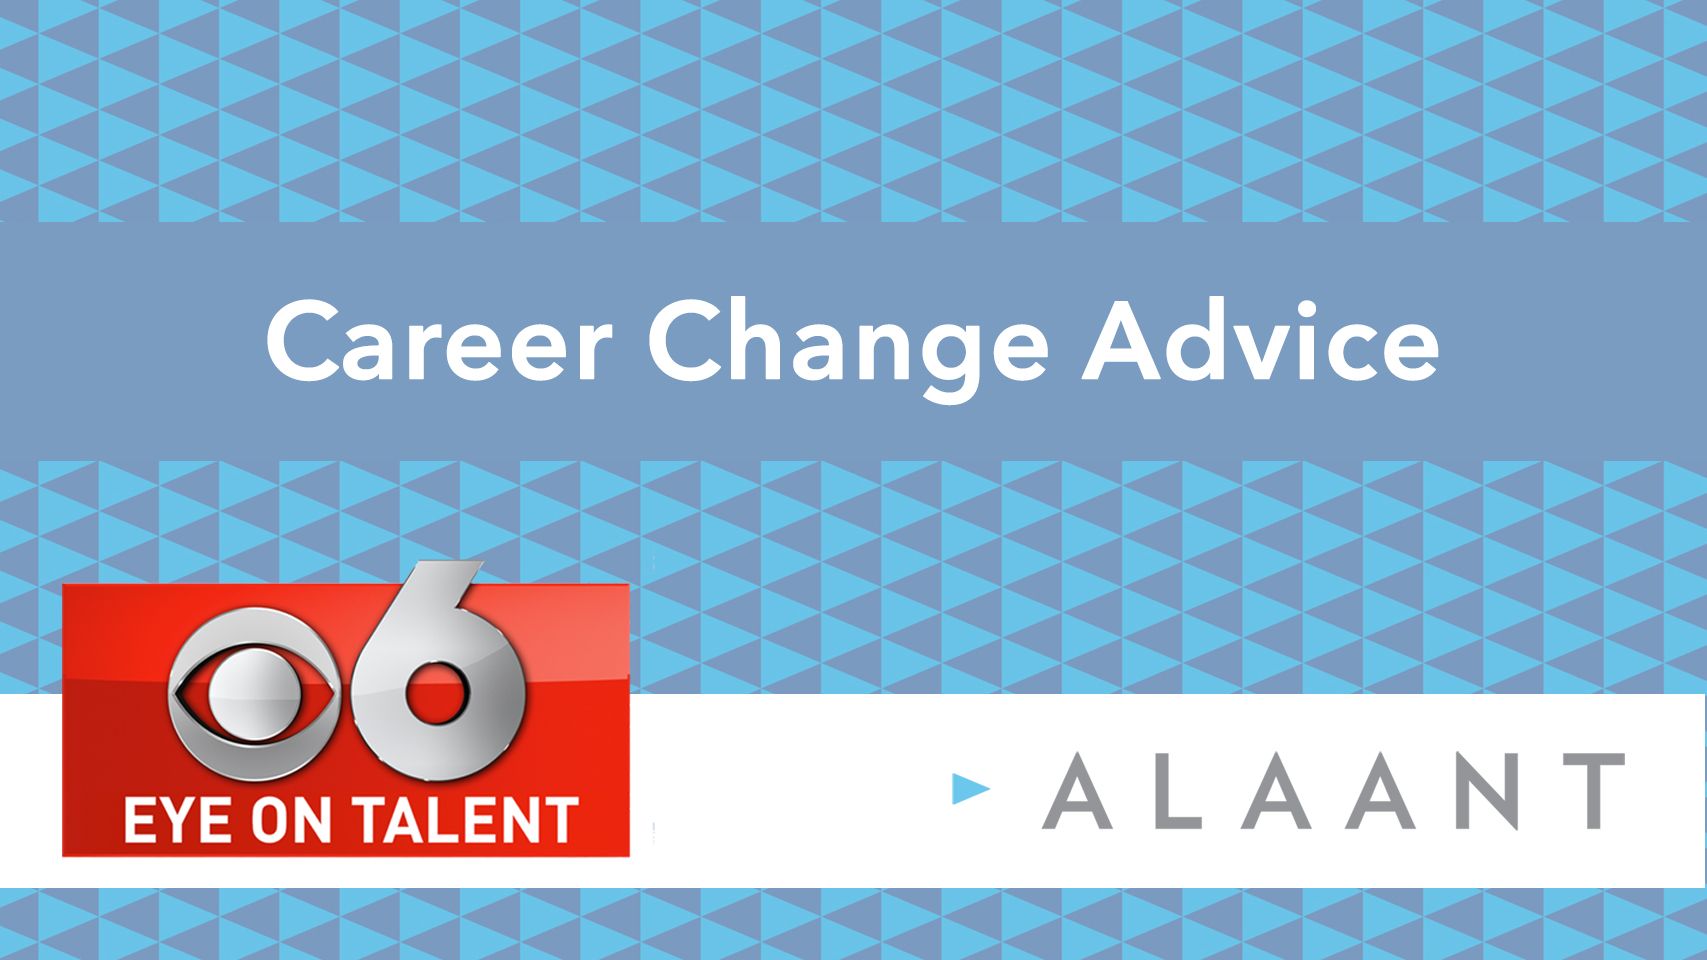 Alaant Eye on Talent: Career Change Advice